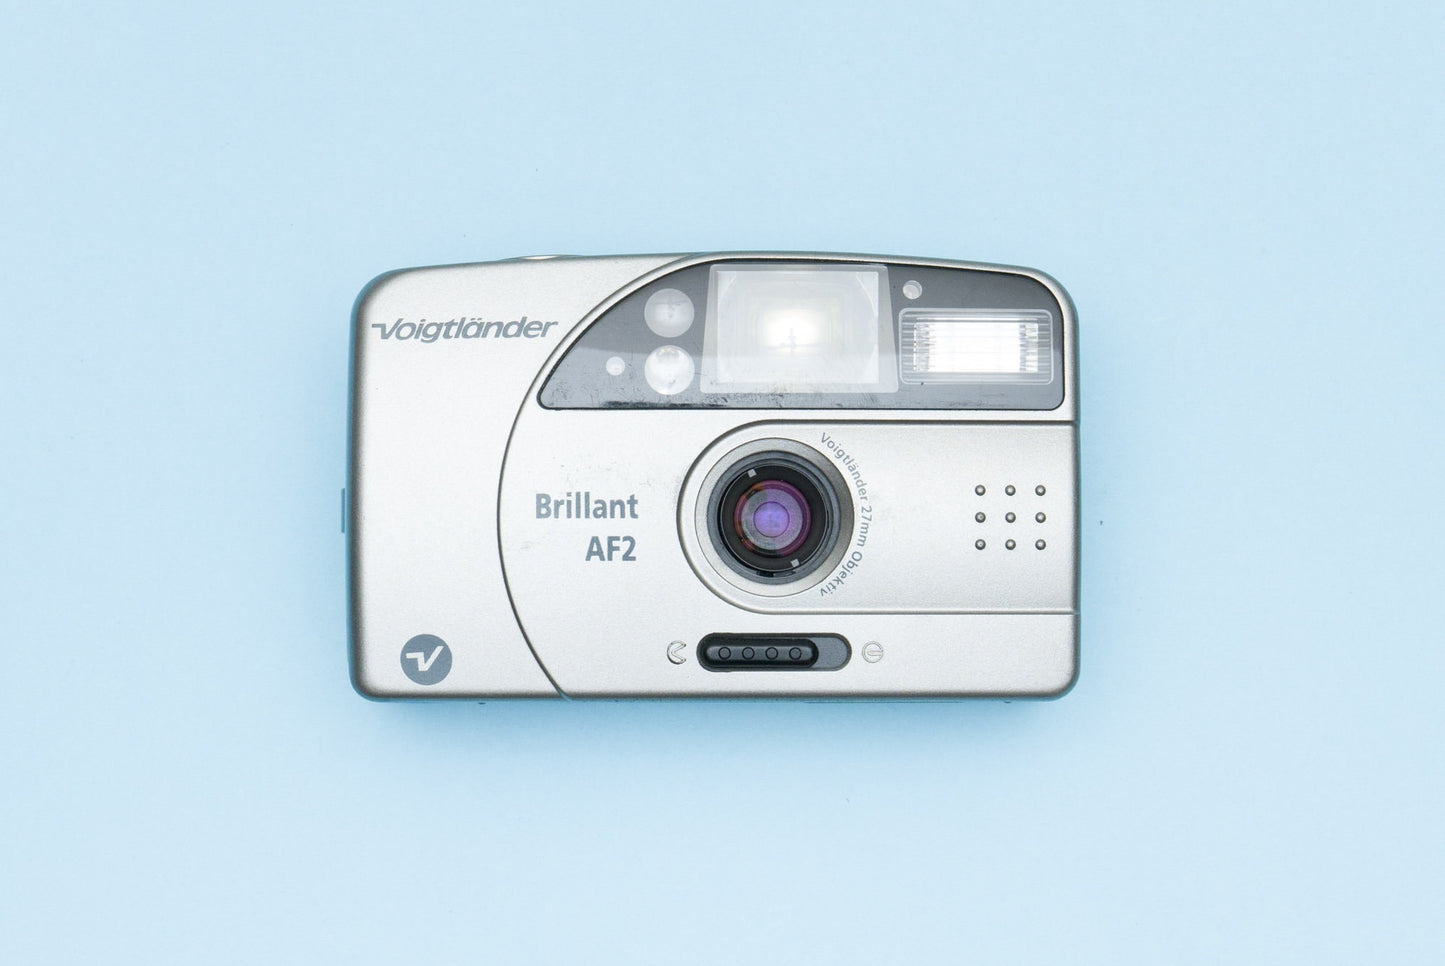 Voigtlander Brillant AF2 35mm Compact Point and Shoot Film Camera